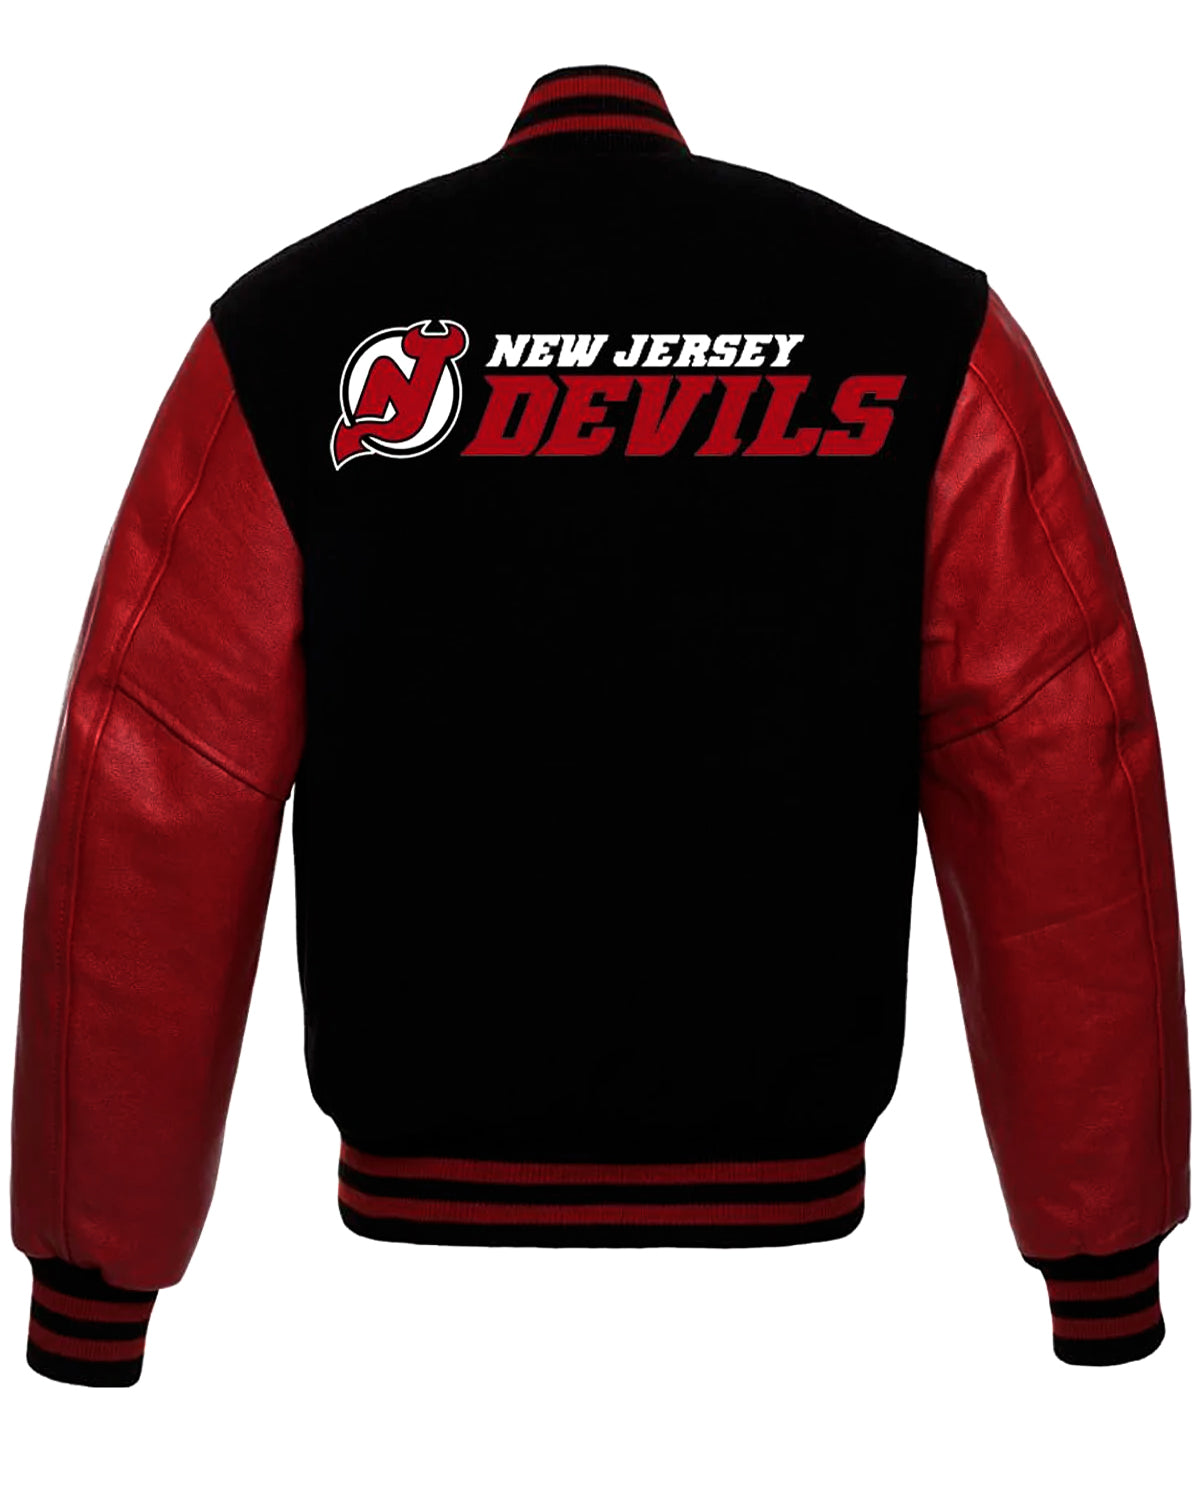 New Jersey Devils Red & Black Varsity Jacket